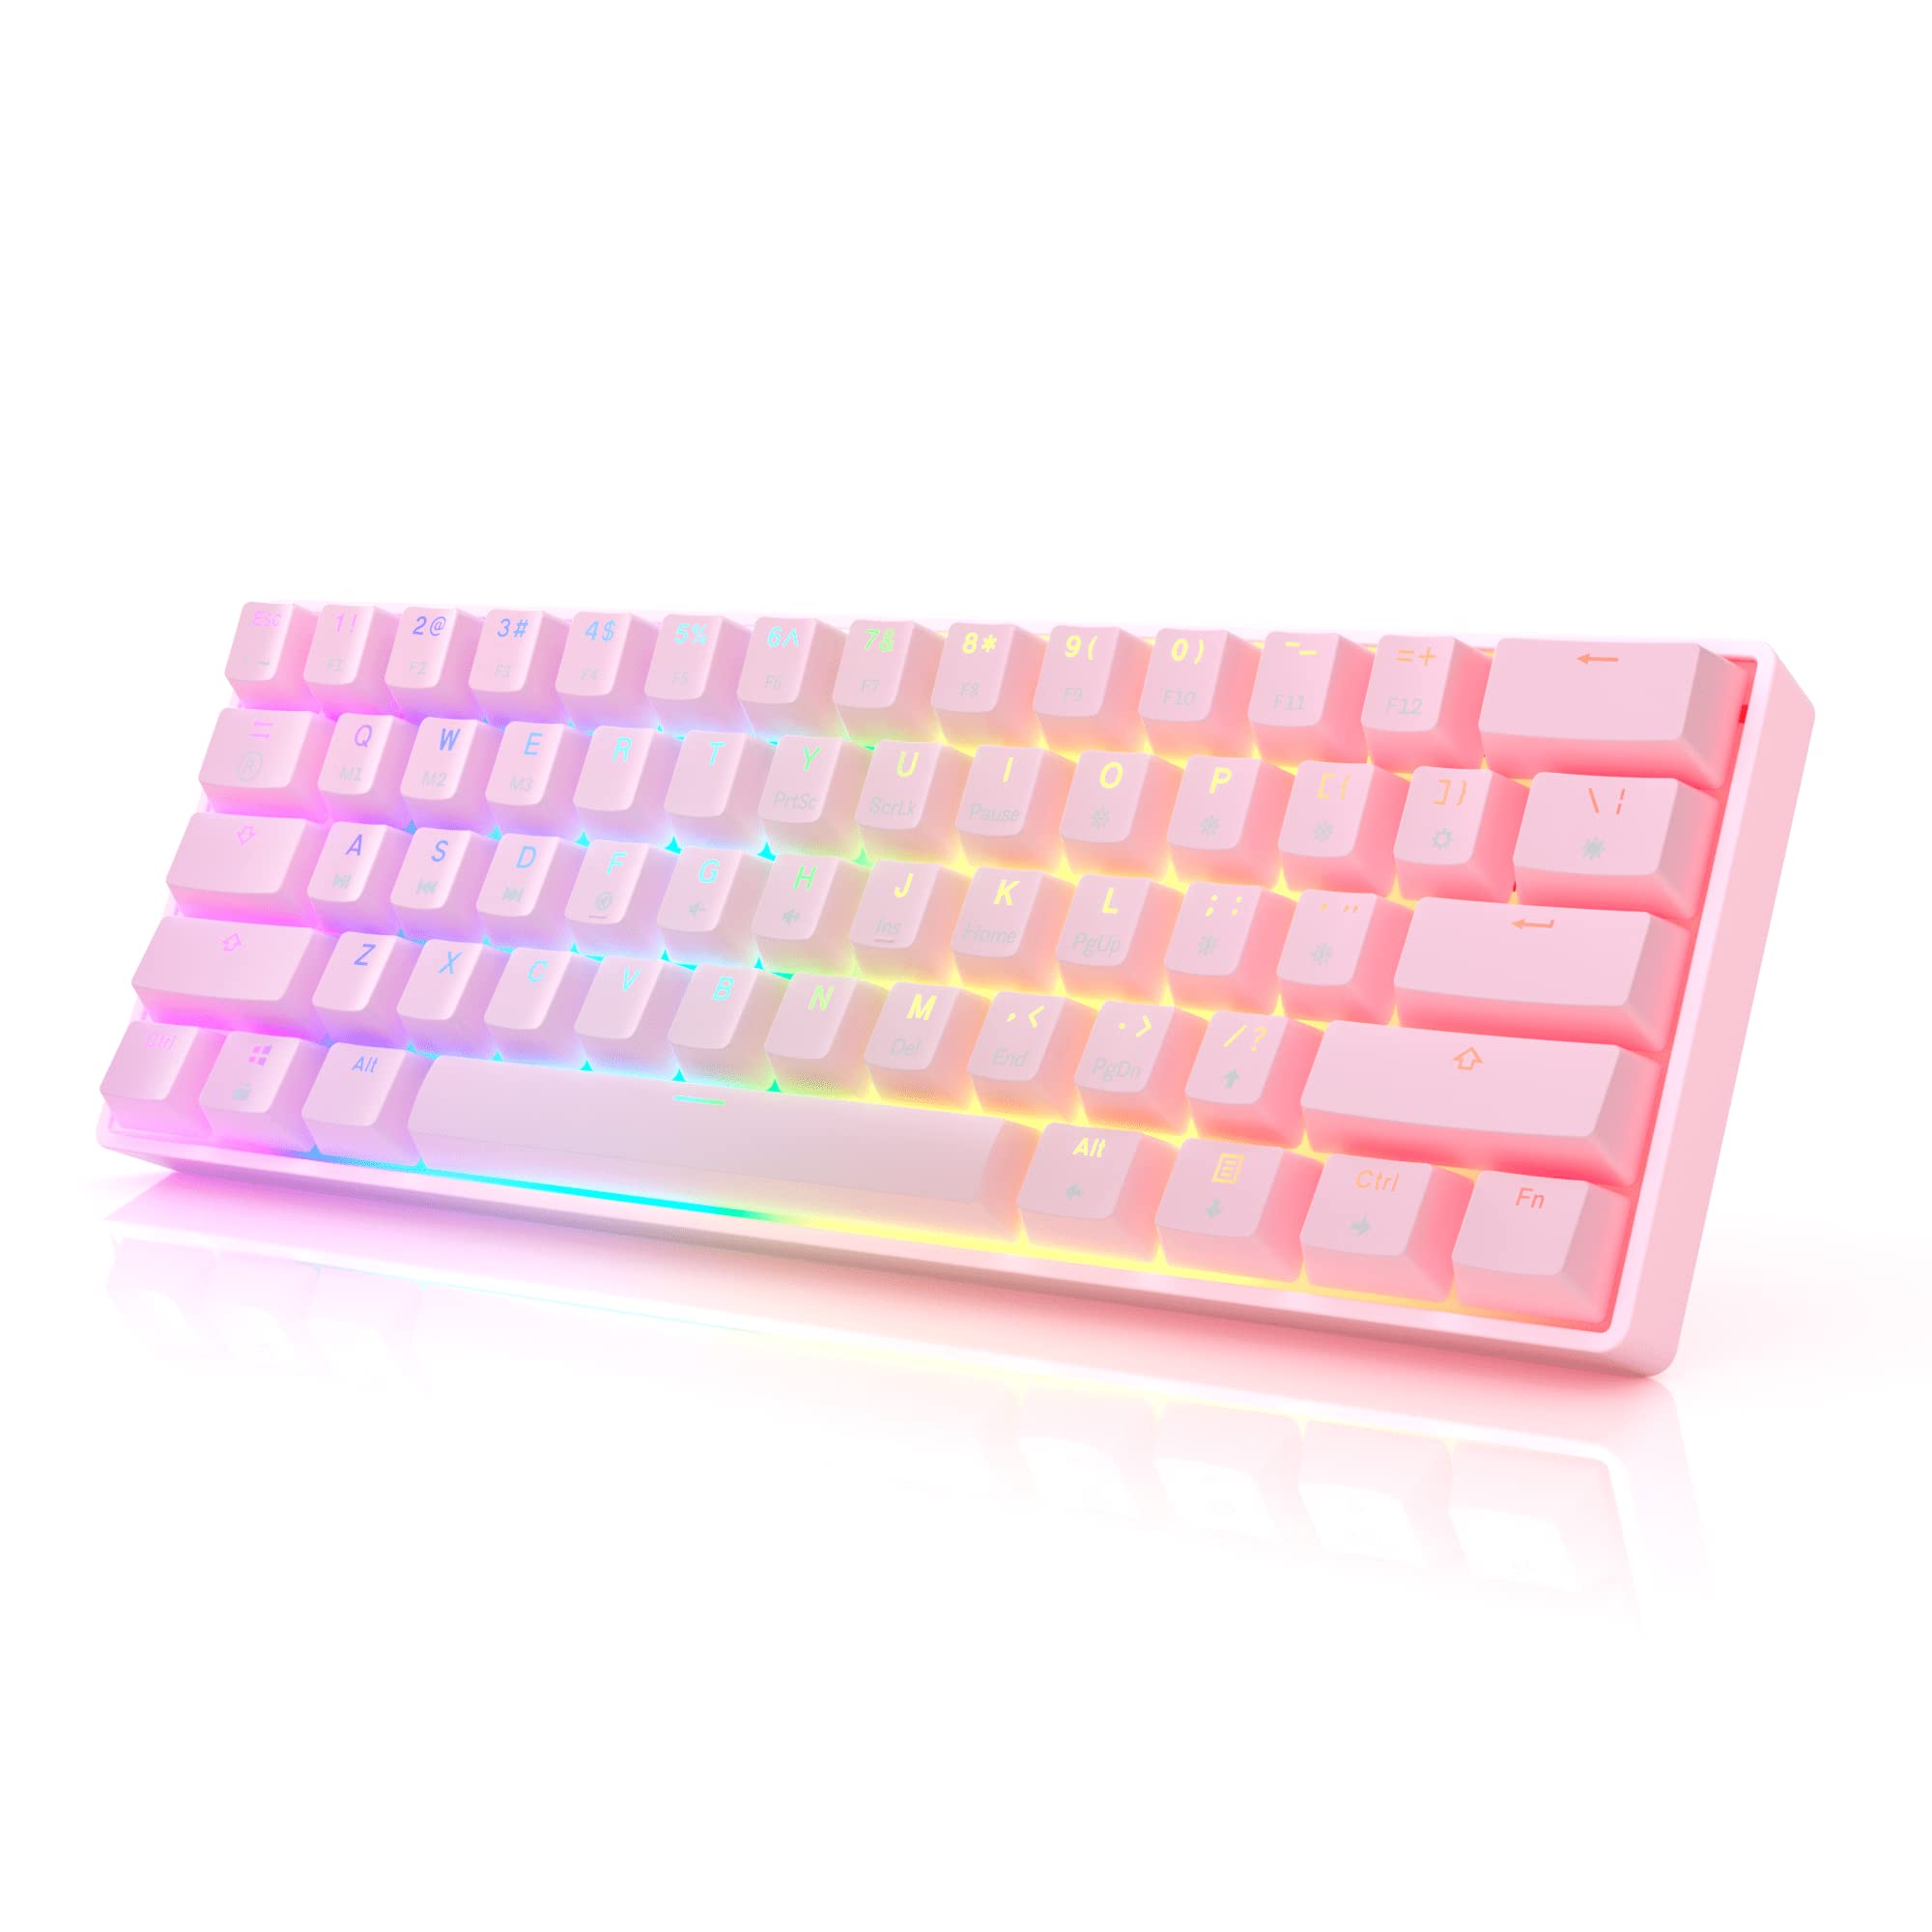 GK61 Mechanical Gaming Keyboard - 61 Keys Multi Color RGB Illuminated LED Backlit Wired Programmable for PC/Mac Gamer (Gateron Optical Blue, Prism Pink)